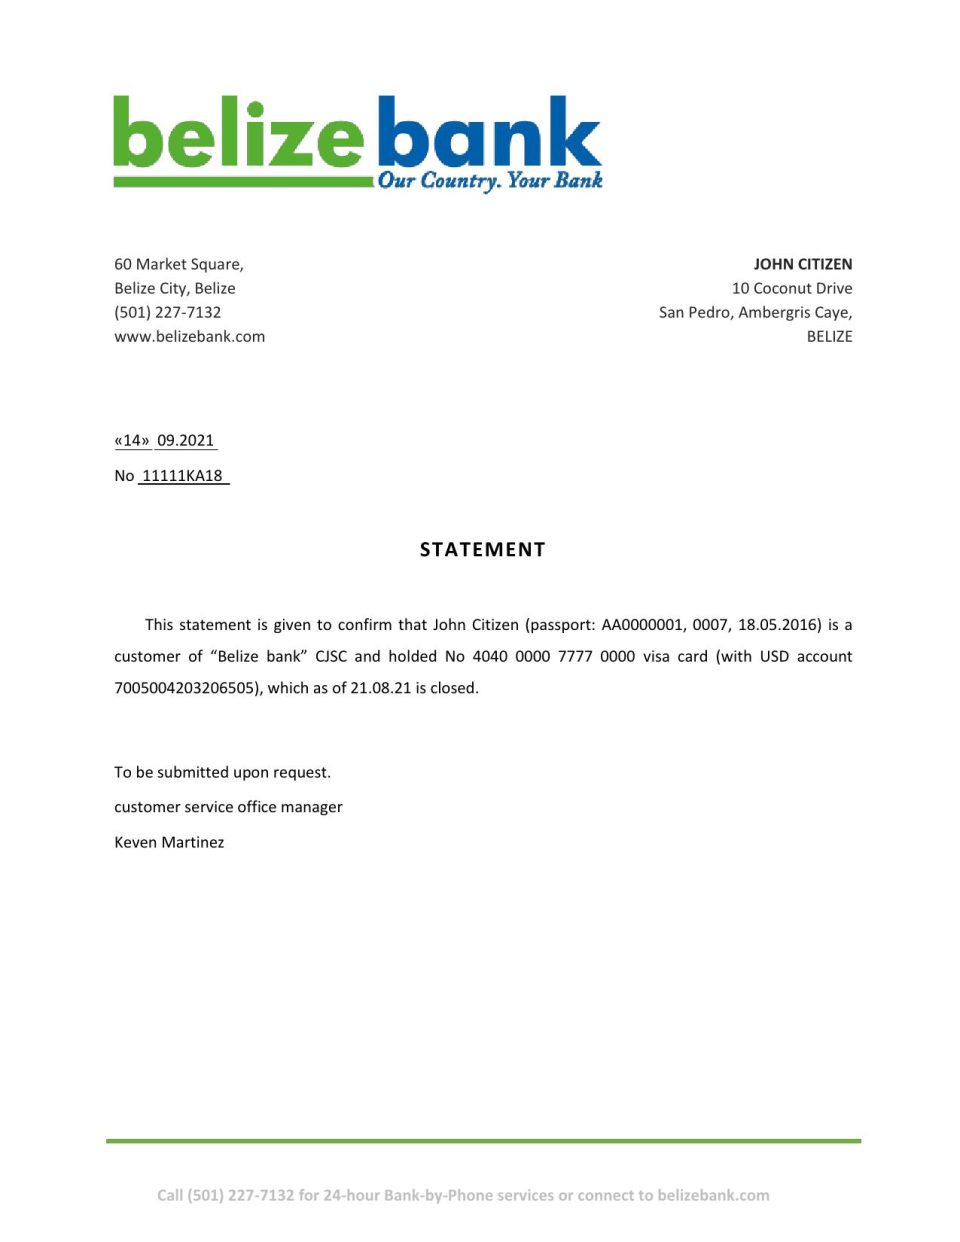 Download Belize Belizebank Bank Reference Letter Templates | Editable Word